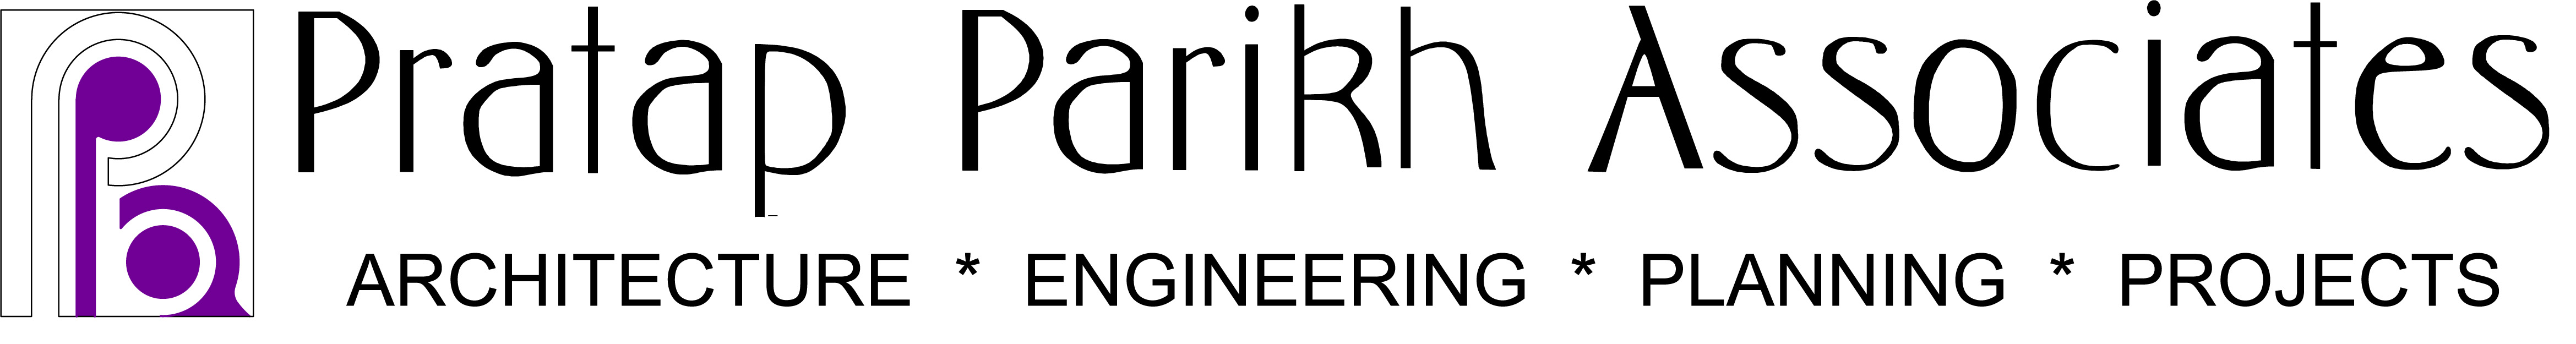 Pratap Parikh Associates|Architect|Professional Services